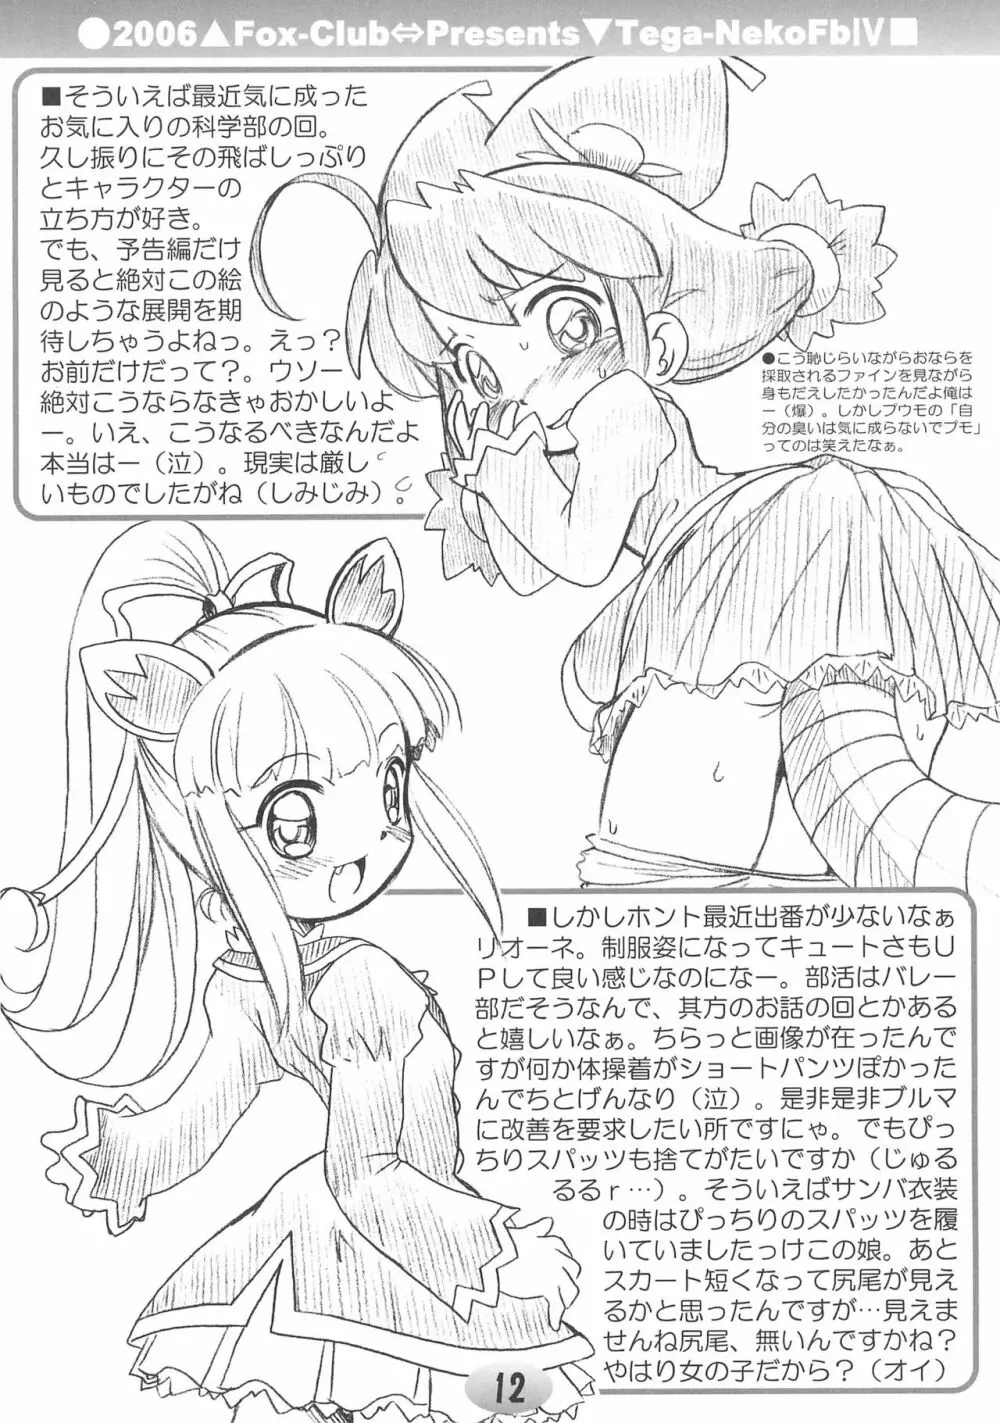 TeGa-NeKo Fb IV ふたご姫 2ぷらす 12ページ